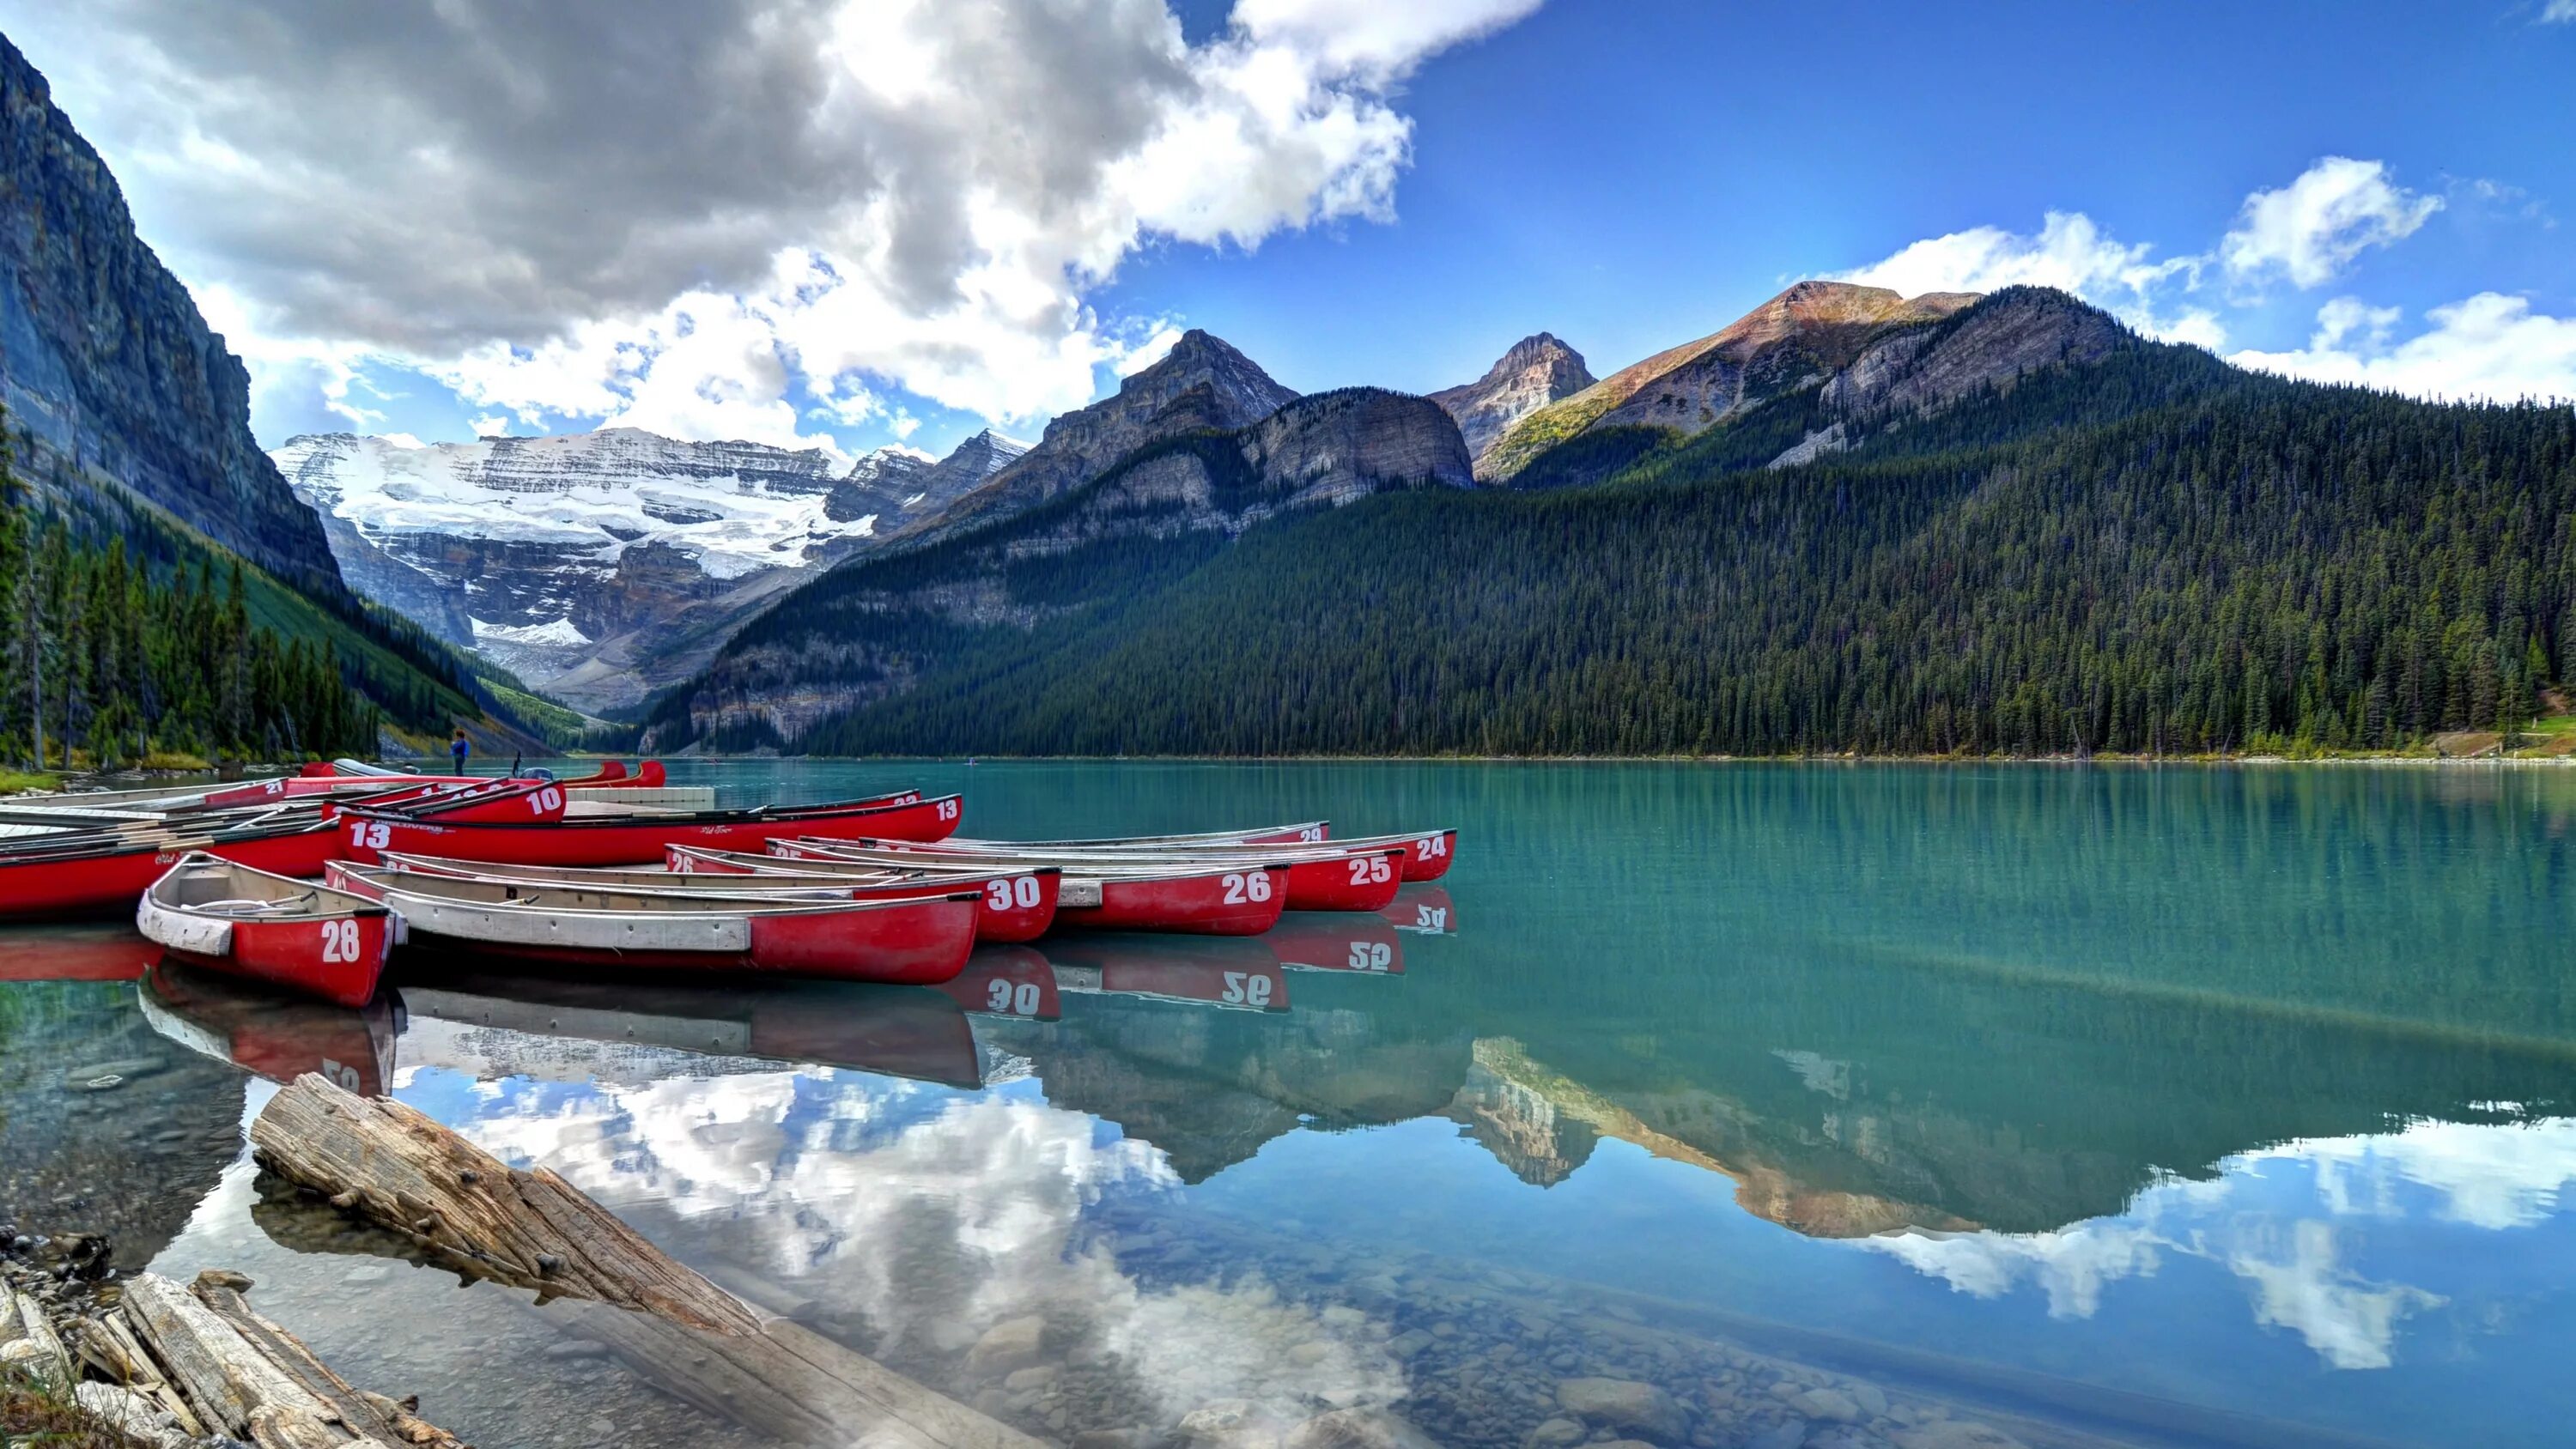 1080 максимальное разрешение. Озеро Луиз Банф Канада. Озеро Морейн в Канаде. Озеро Морейн, Канада лодки. Новоскошия Канада.